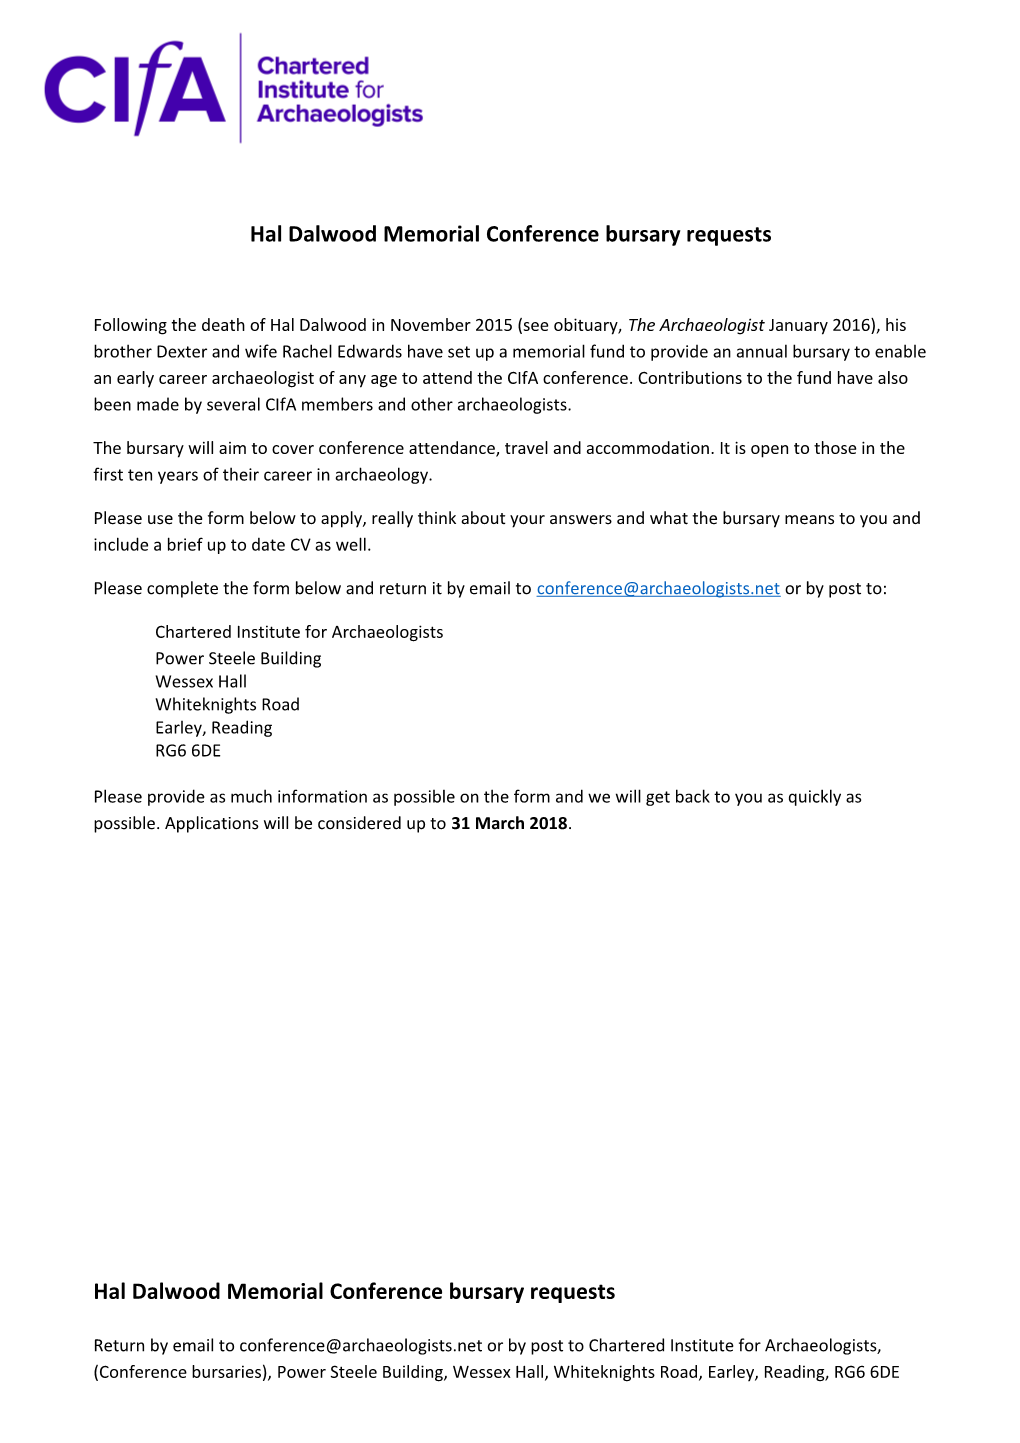 Hal Dalwood Memorial Conference Bursary Requests